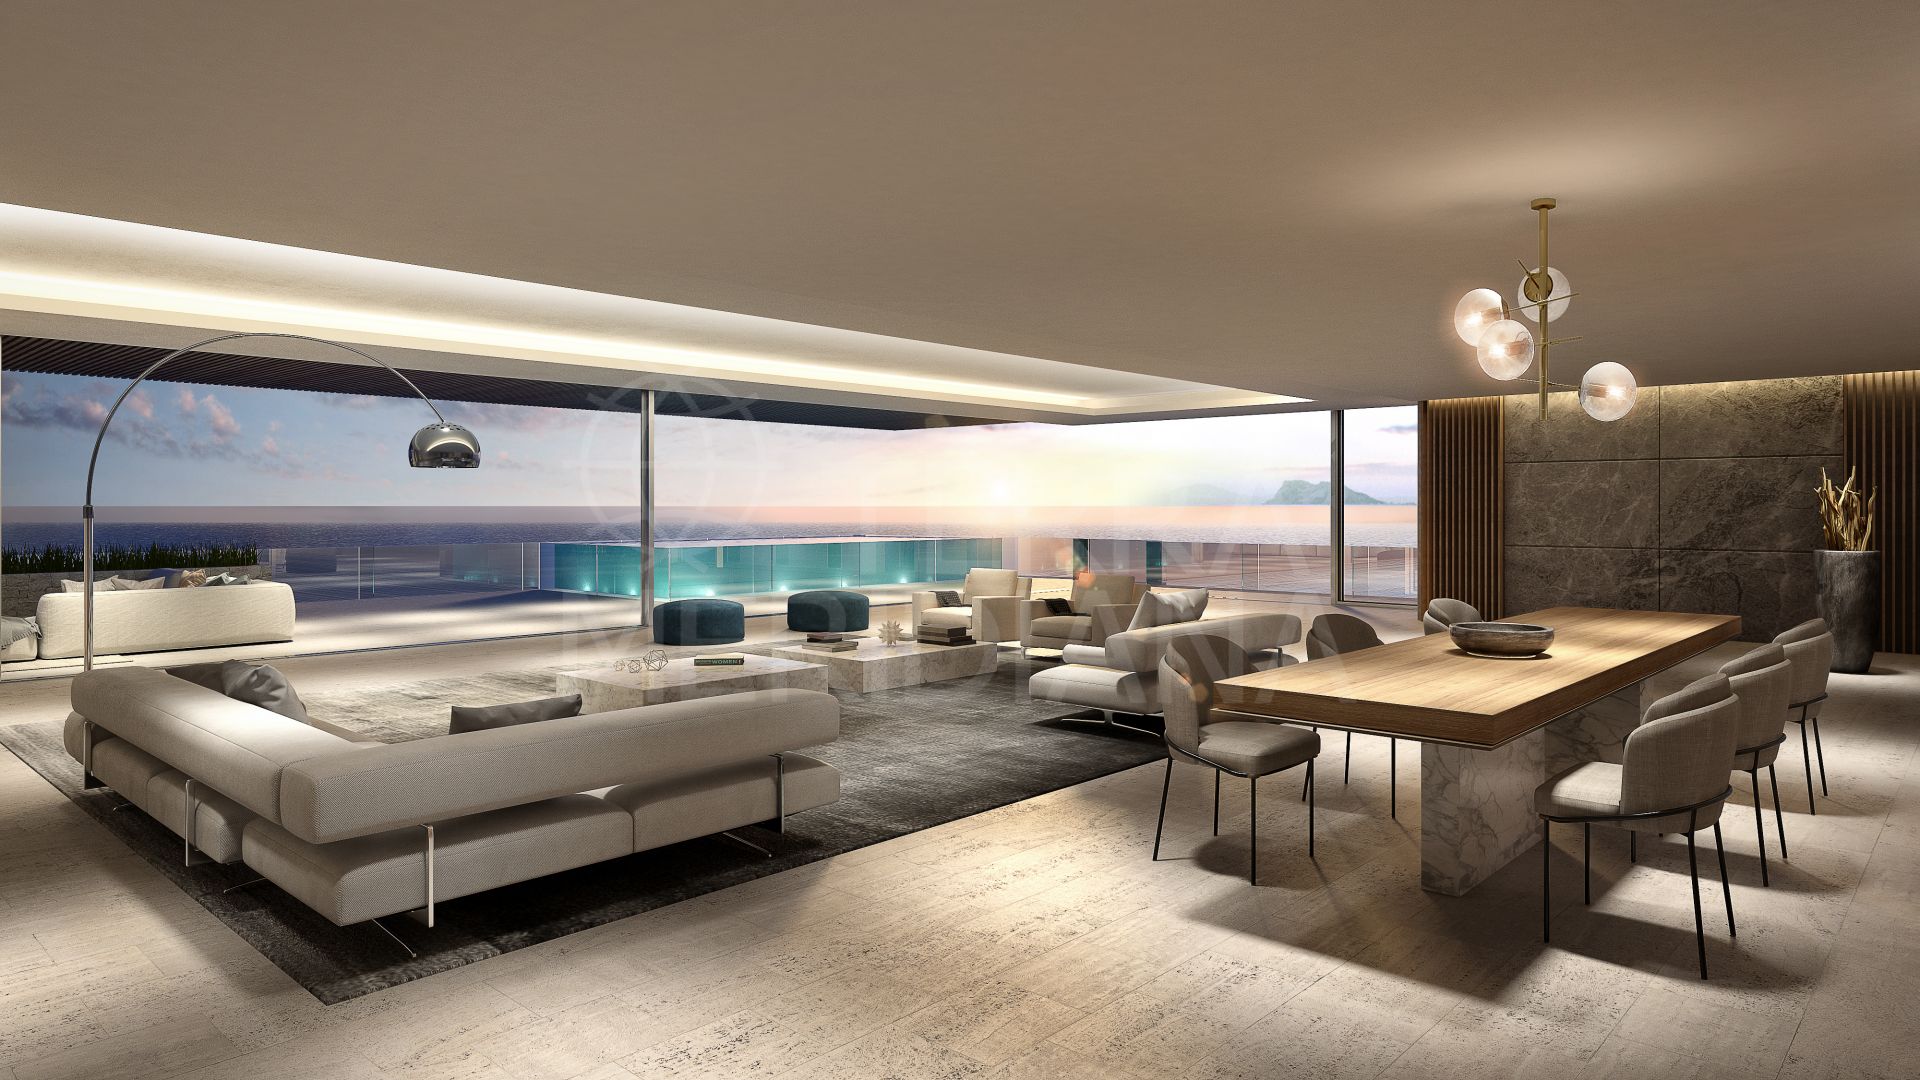 Middle floor apartment for sale in the exclusive resort of Ikkil Bay, Estepona